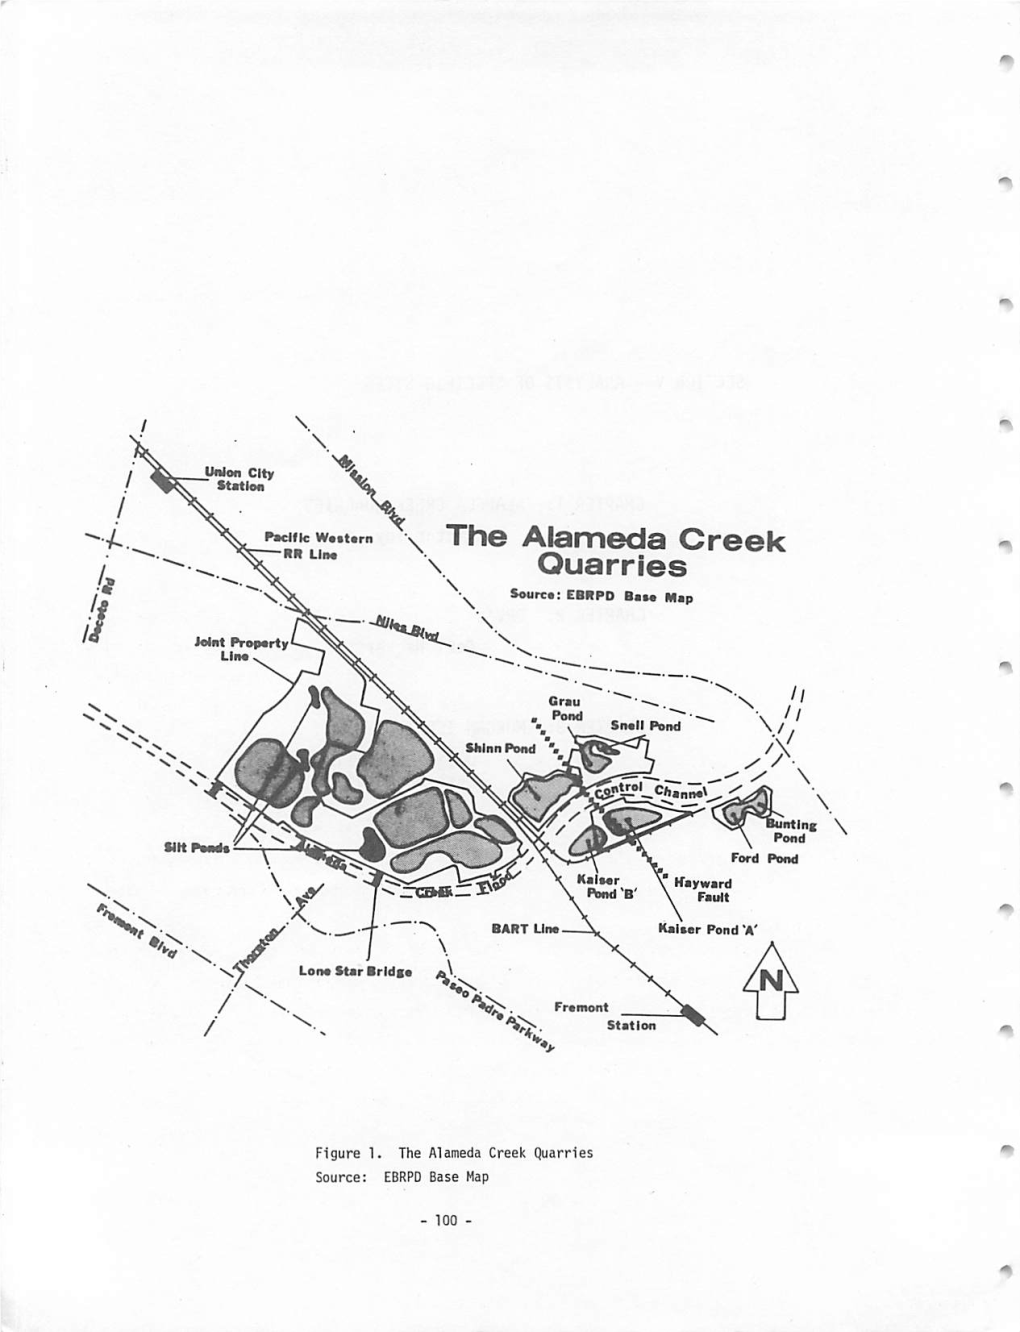 The Alameda Creek Quarries: a Land Use Development Plan